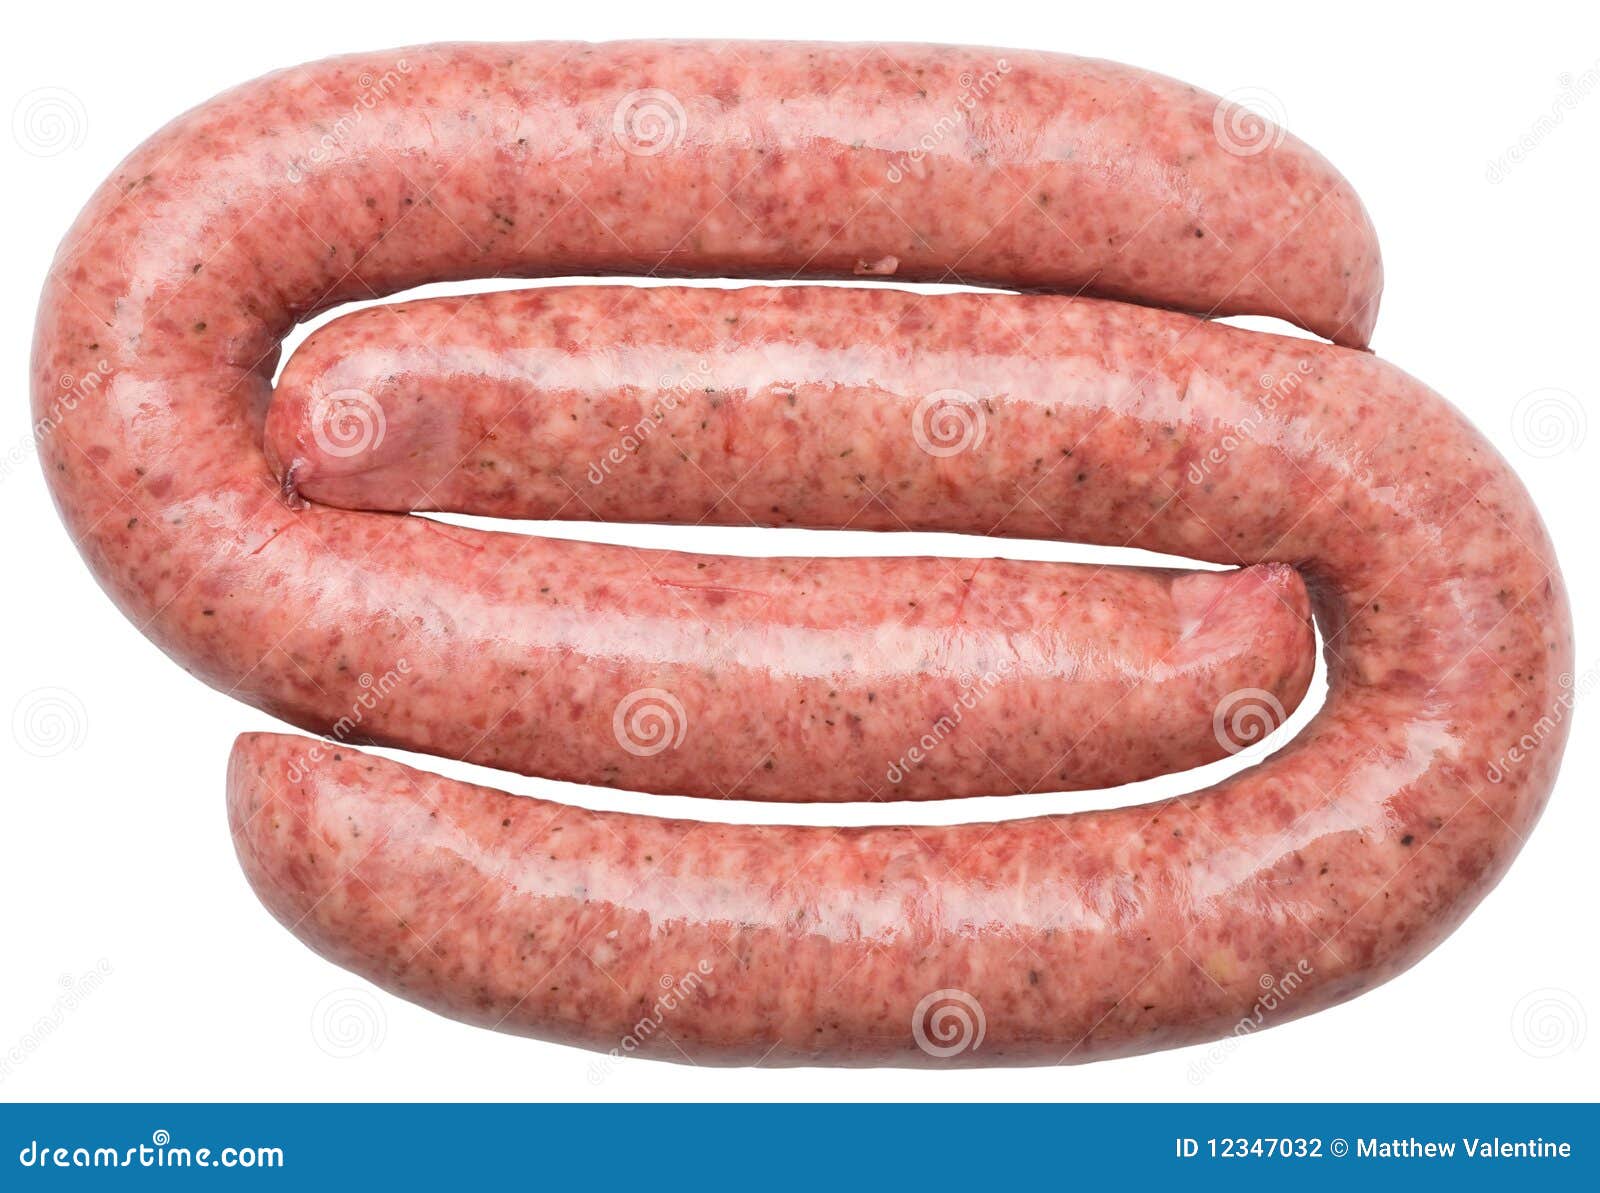 two-large-kielbasa-sausages-12347032.jpg